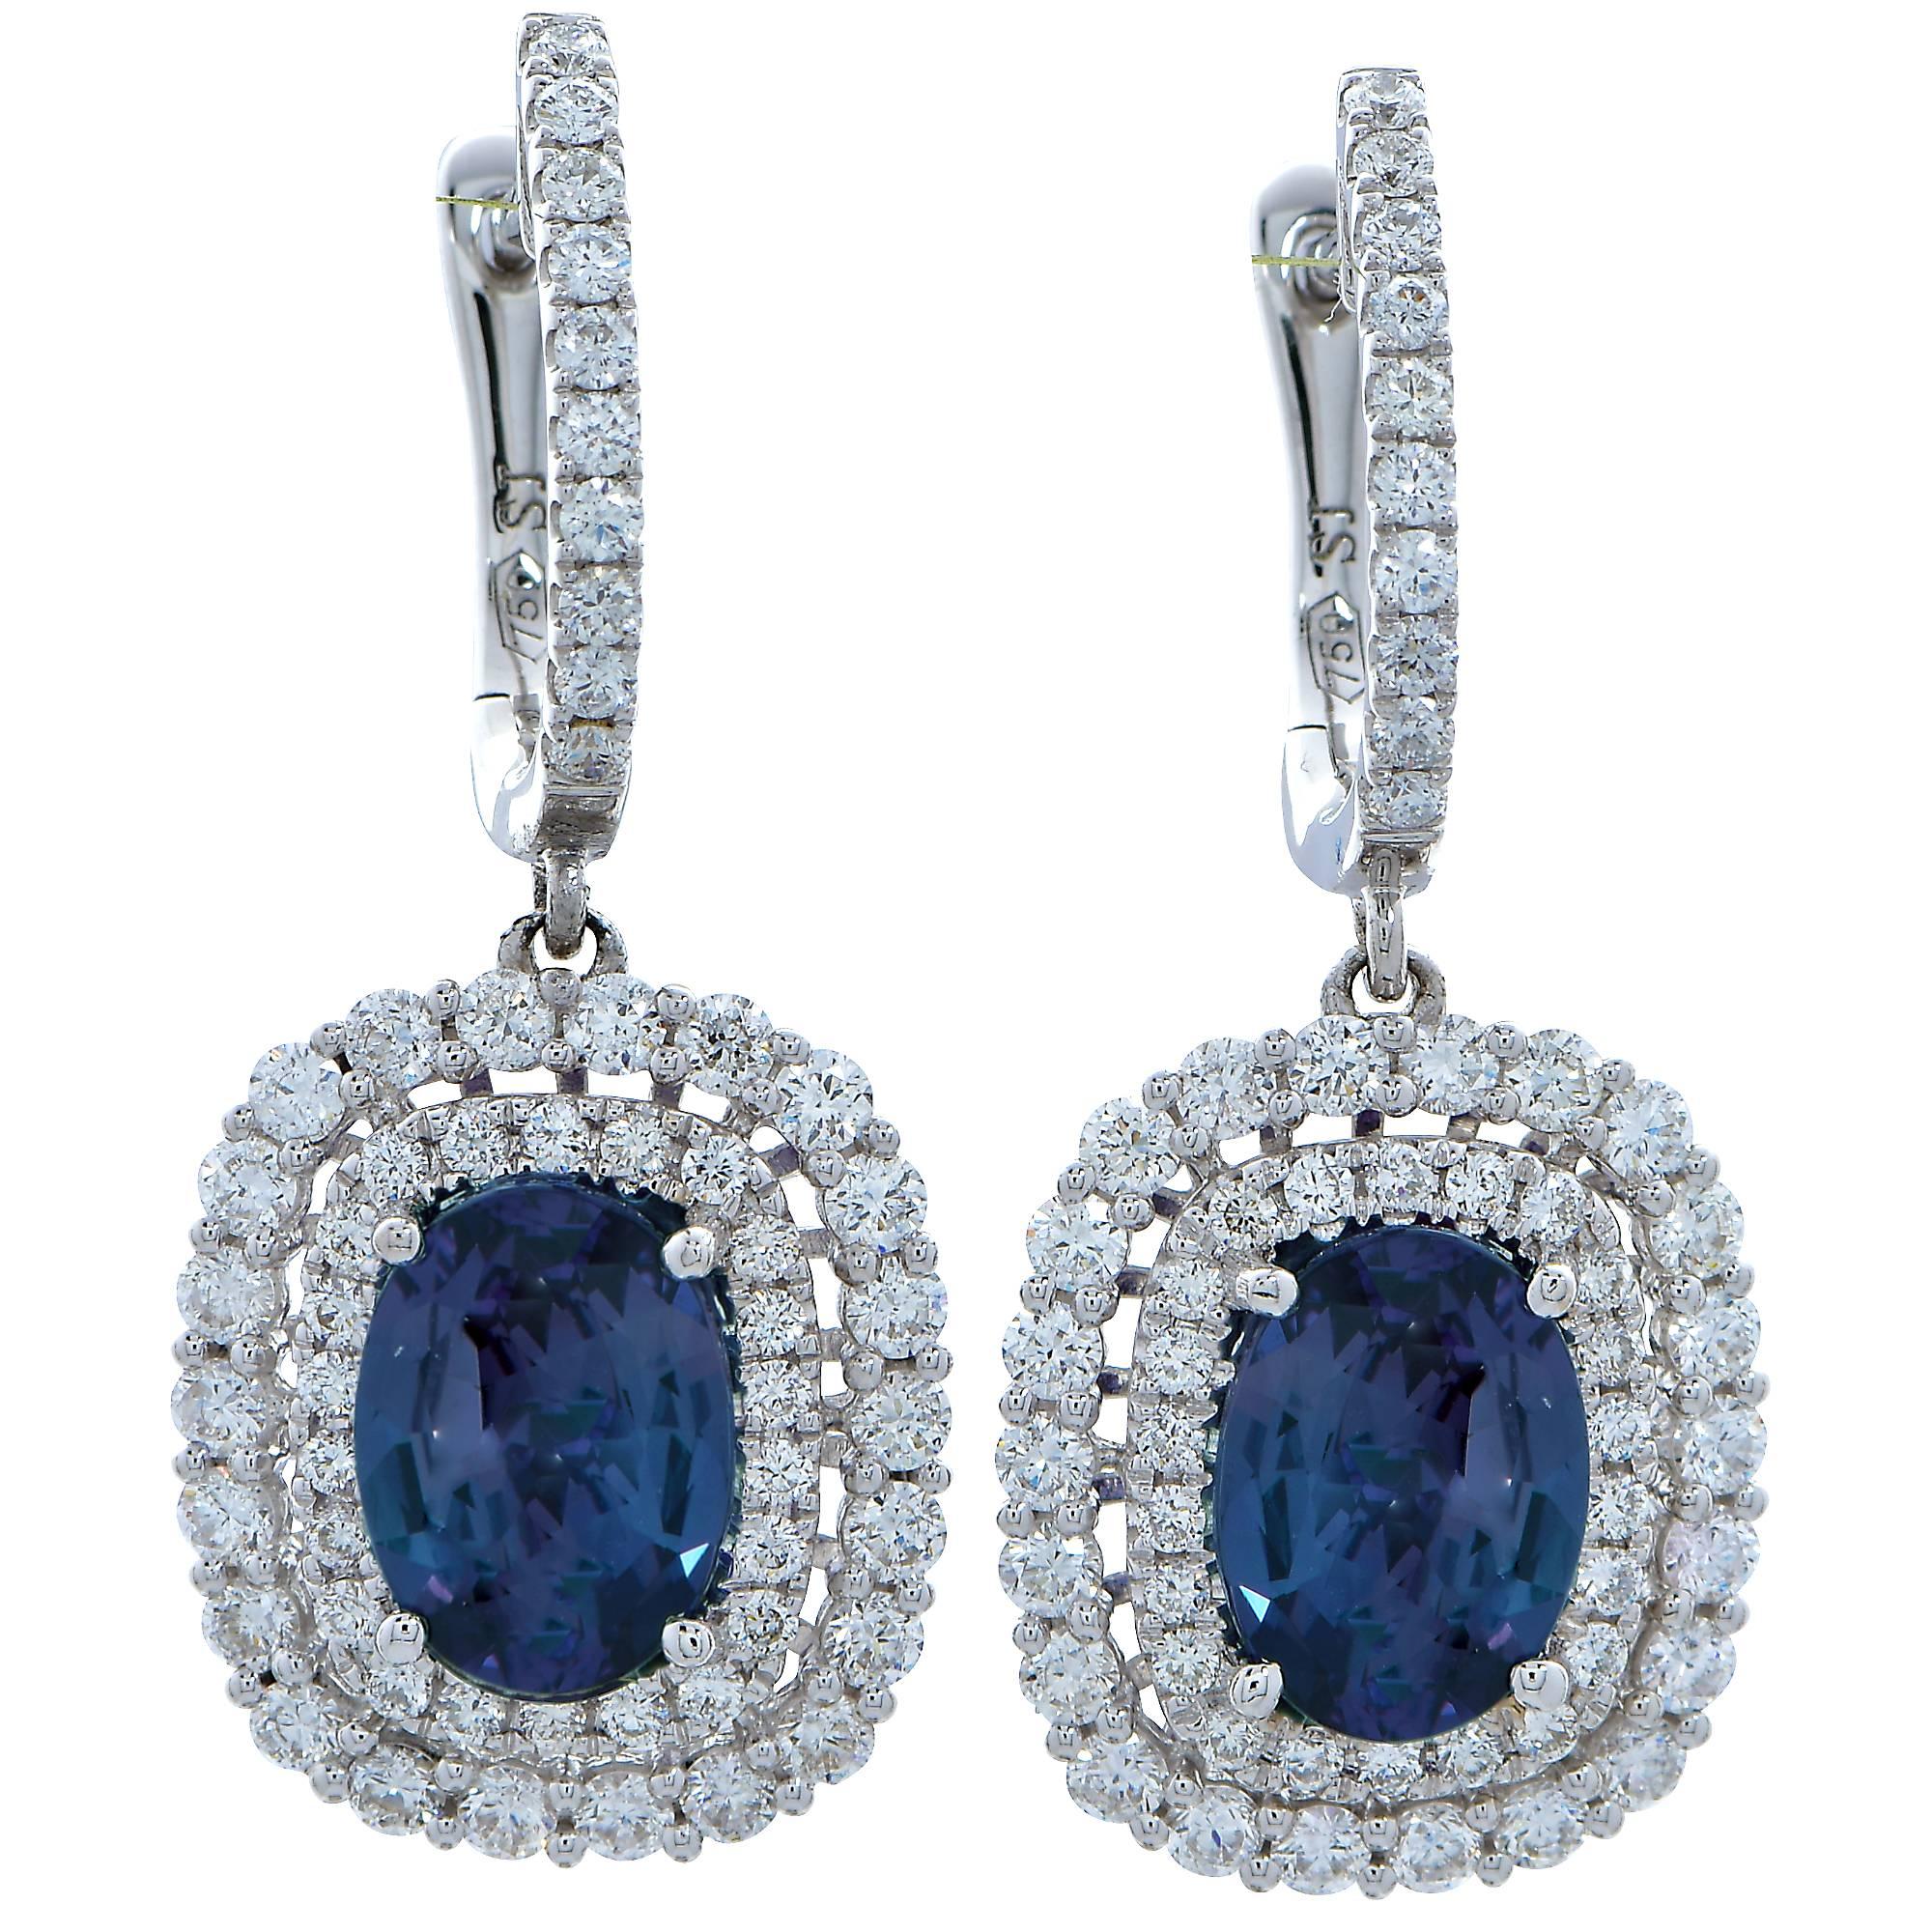 Spectacular Natural Chrysoberyl Alexandrite Diamond Earrings